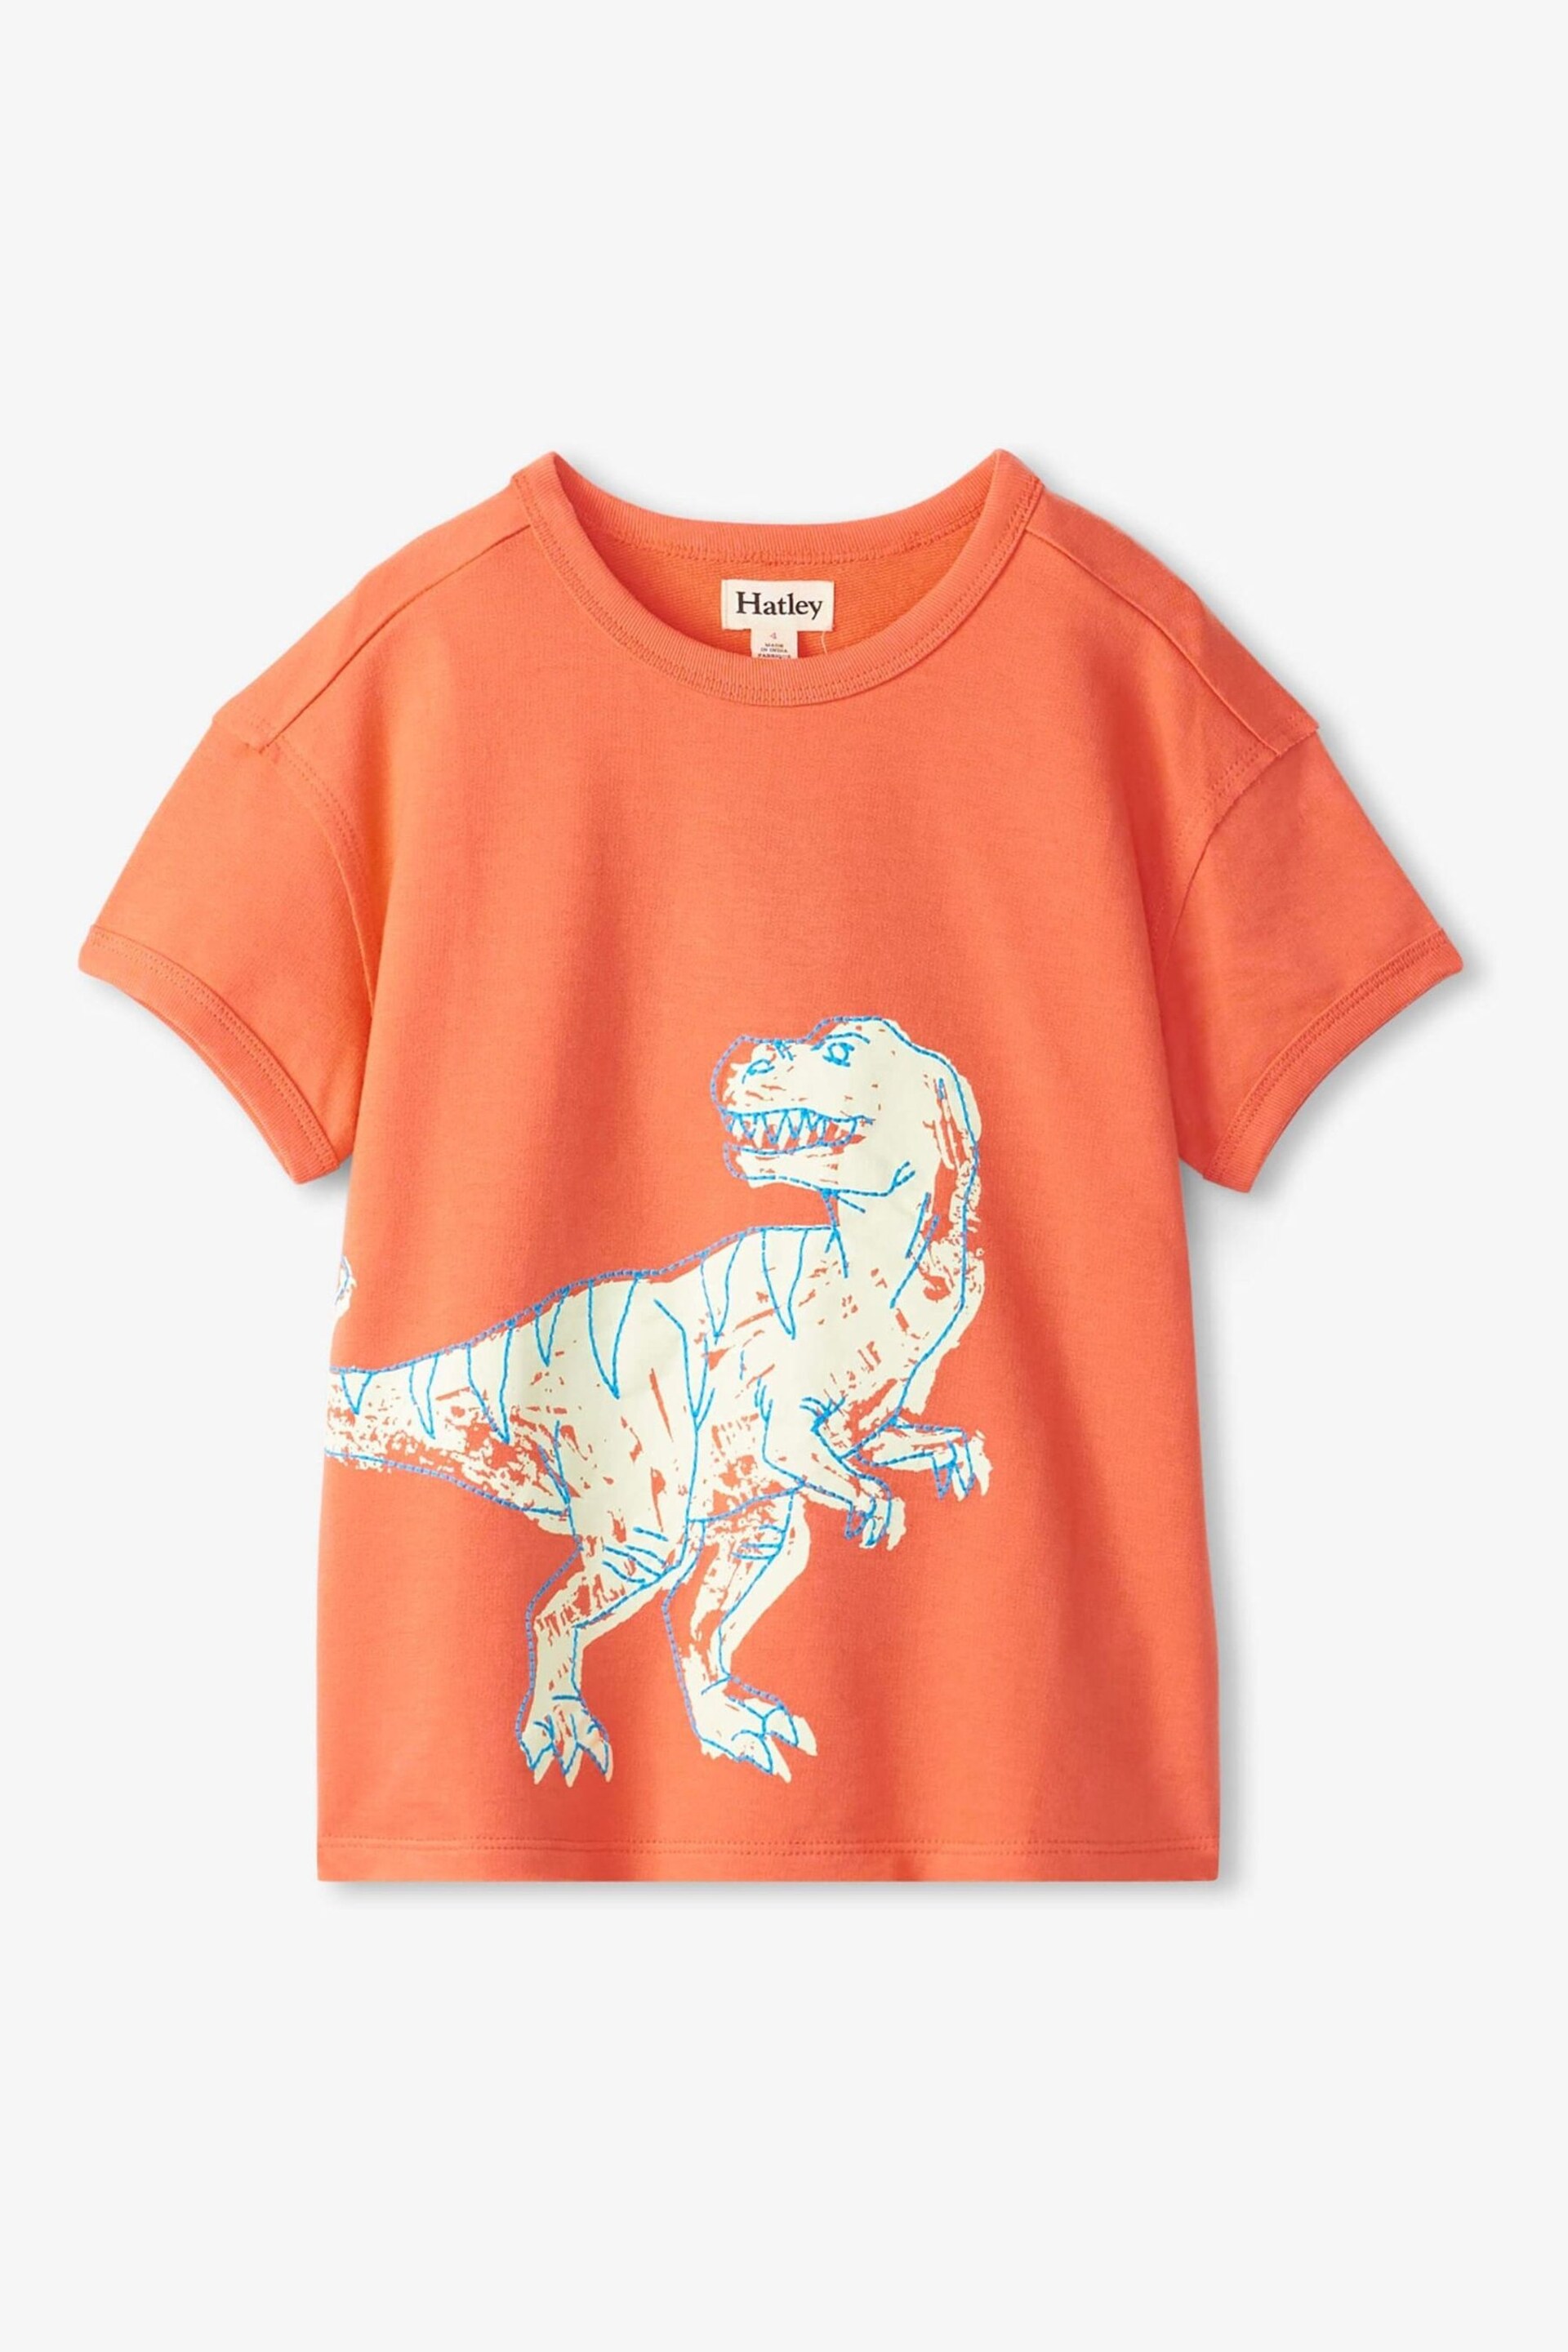 Hatley Orange Dinosaur Glow T-Shirt - Image 1 of 6